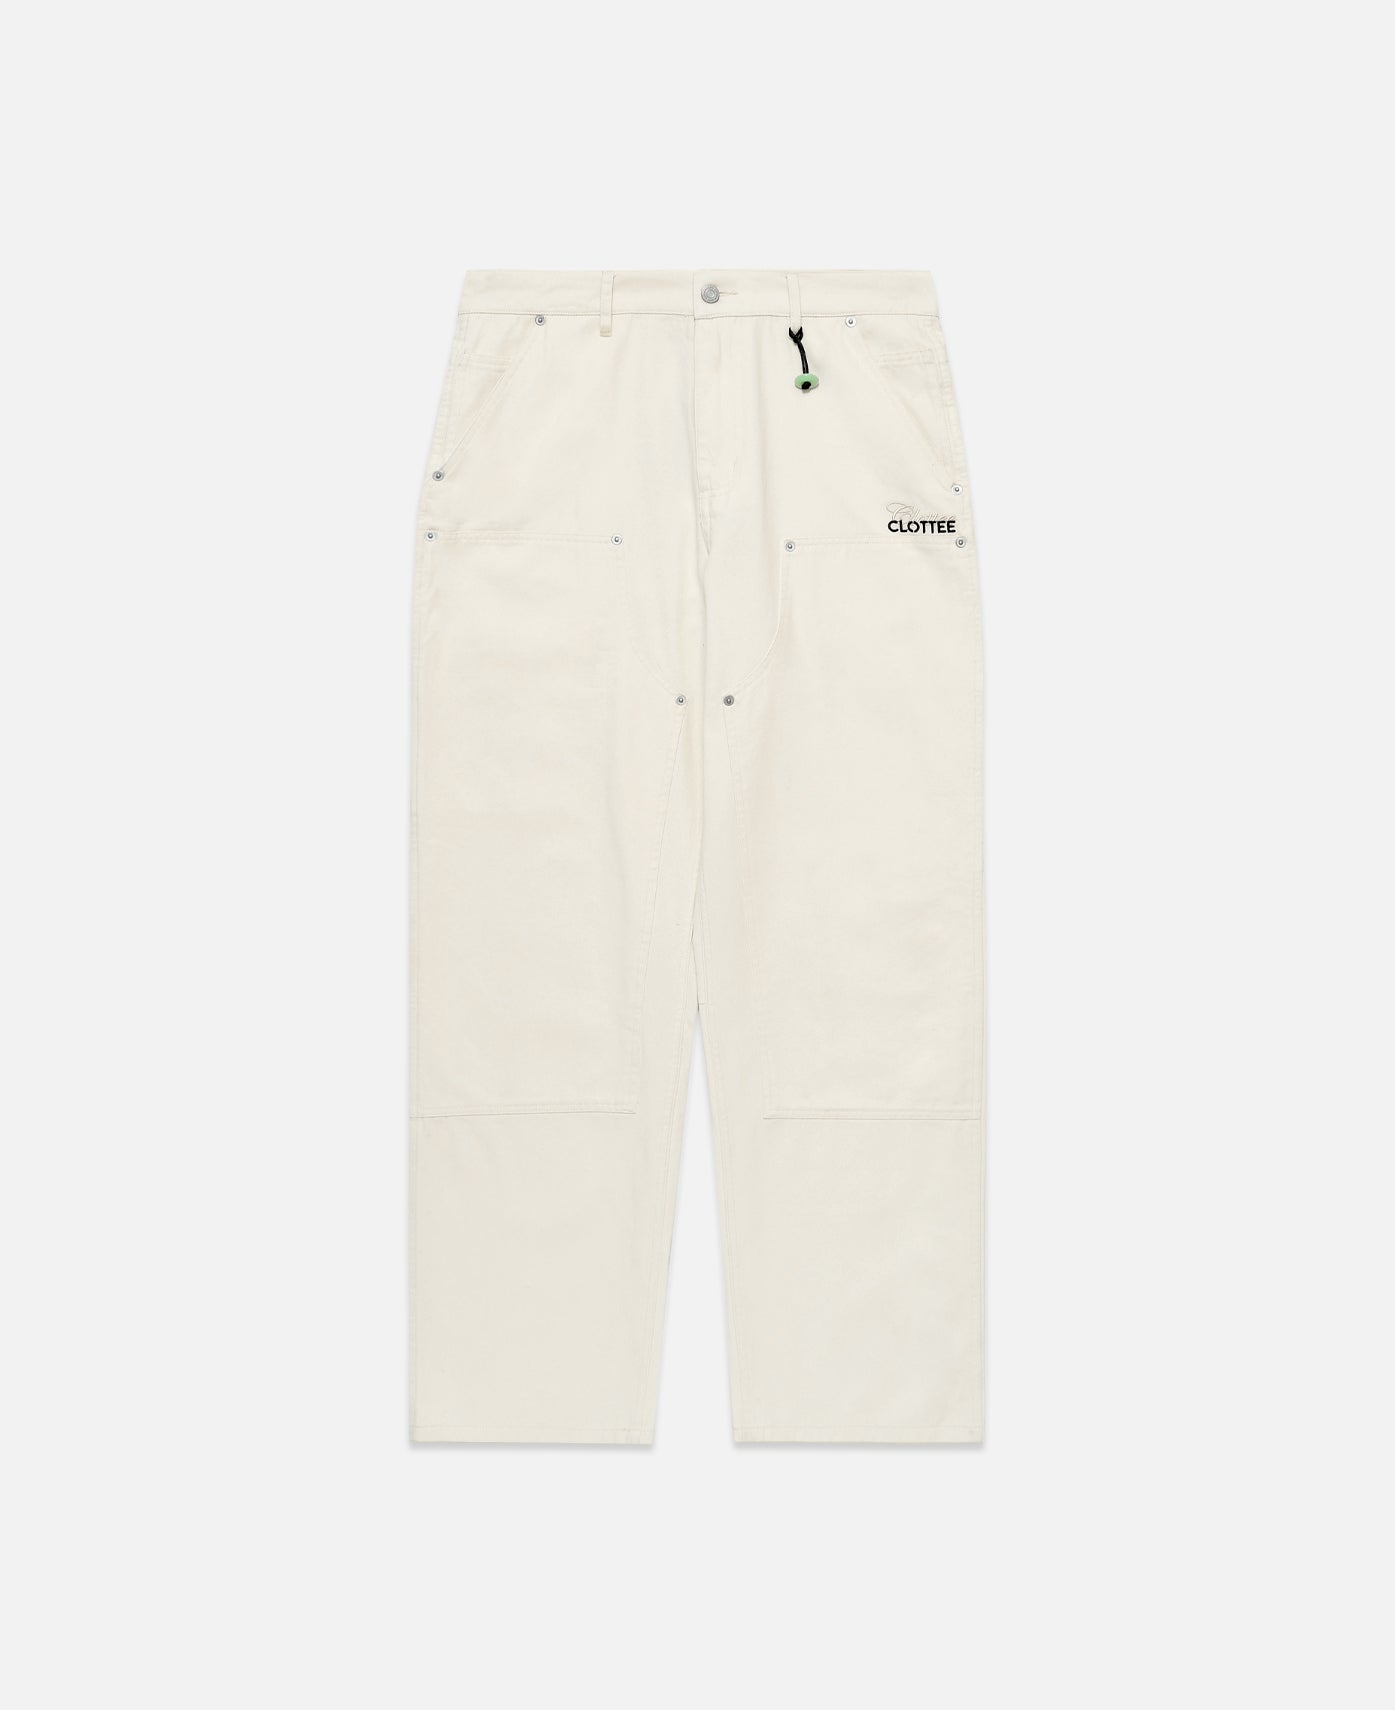 Men's Carpenter Work Jeans Hammer Loop Relaxed Fit Casual Cotton Denim Pants  (White, 32x32) - Walmart.com